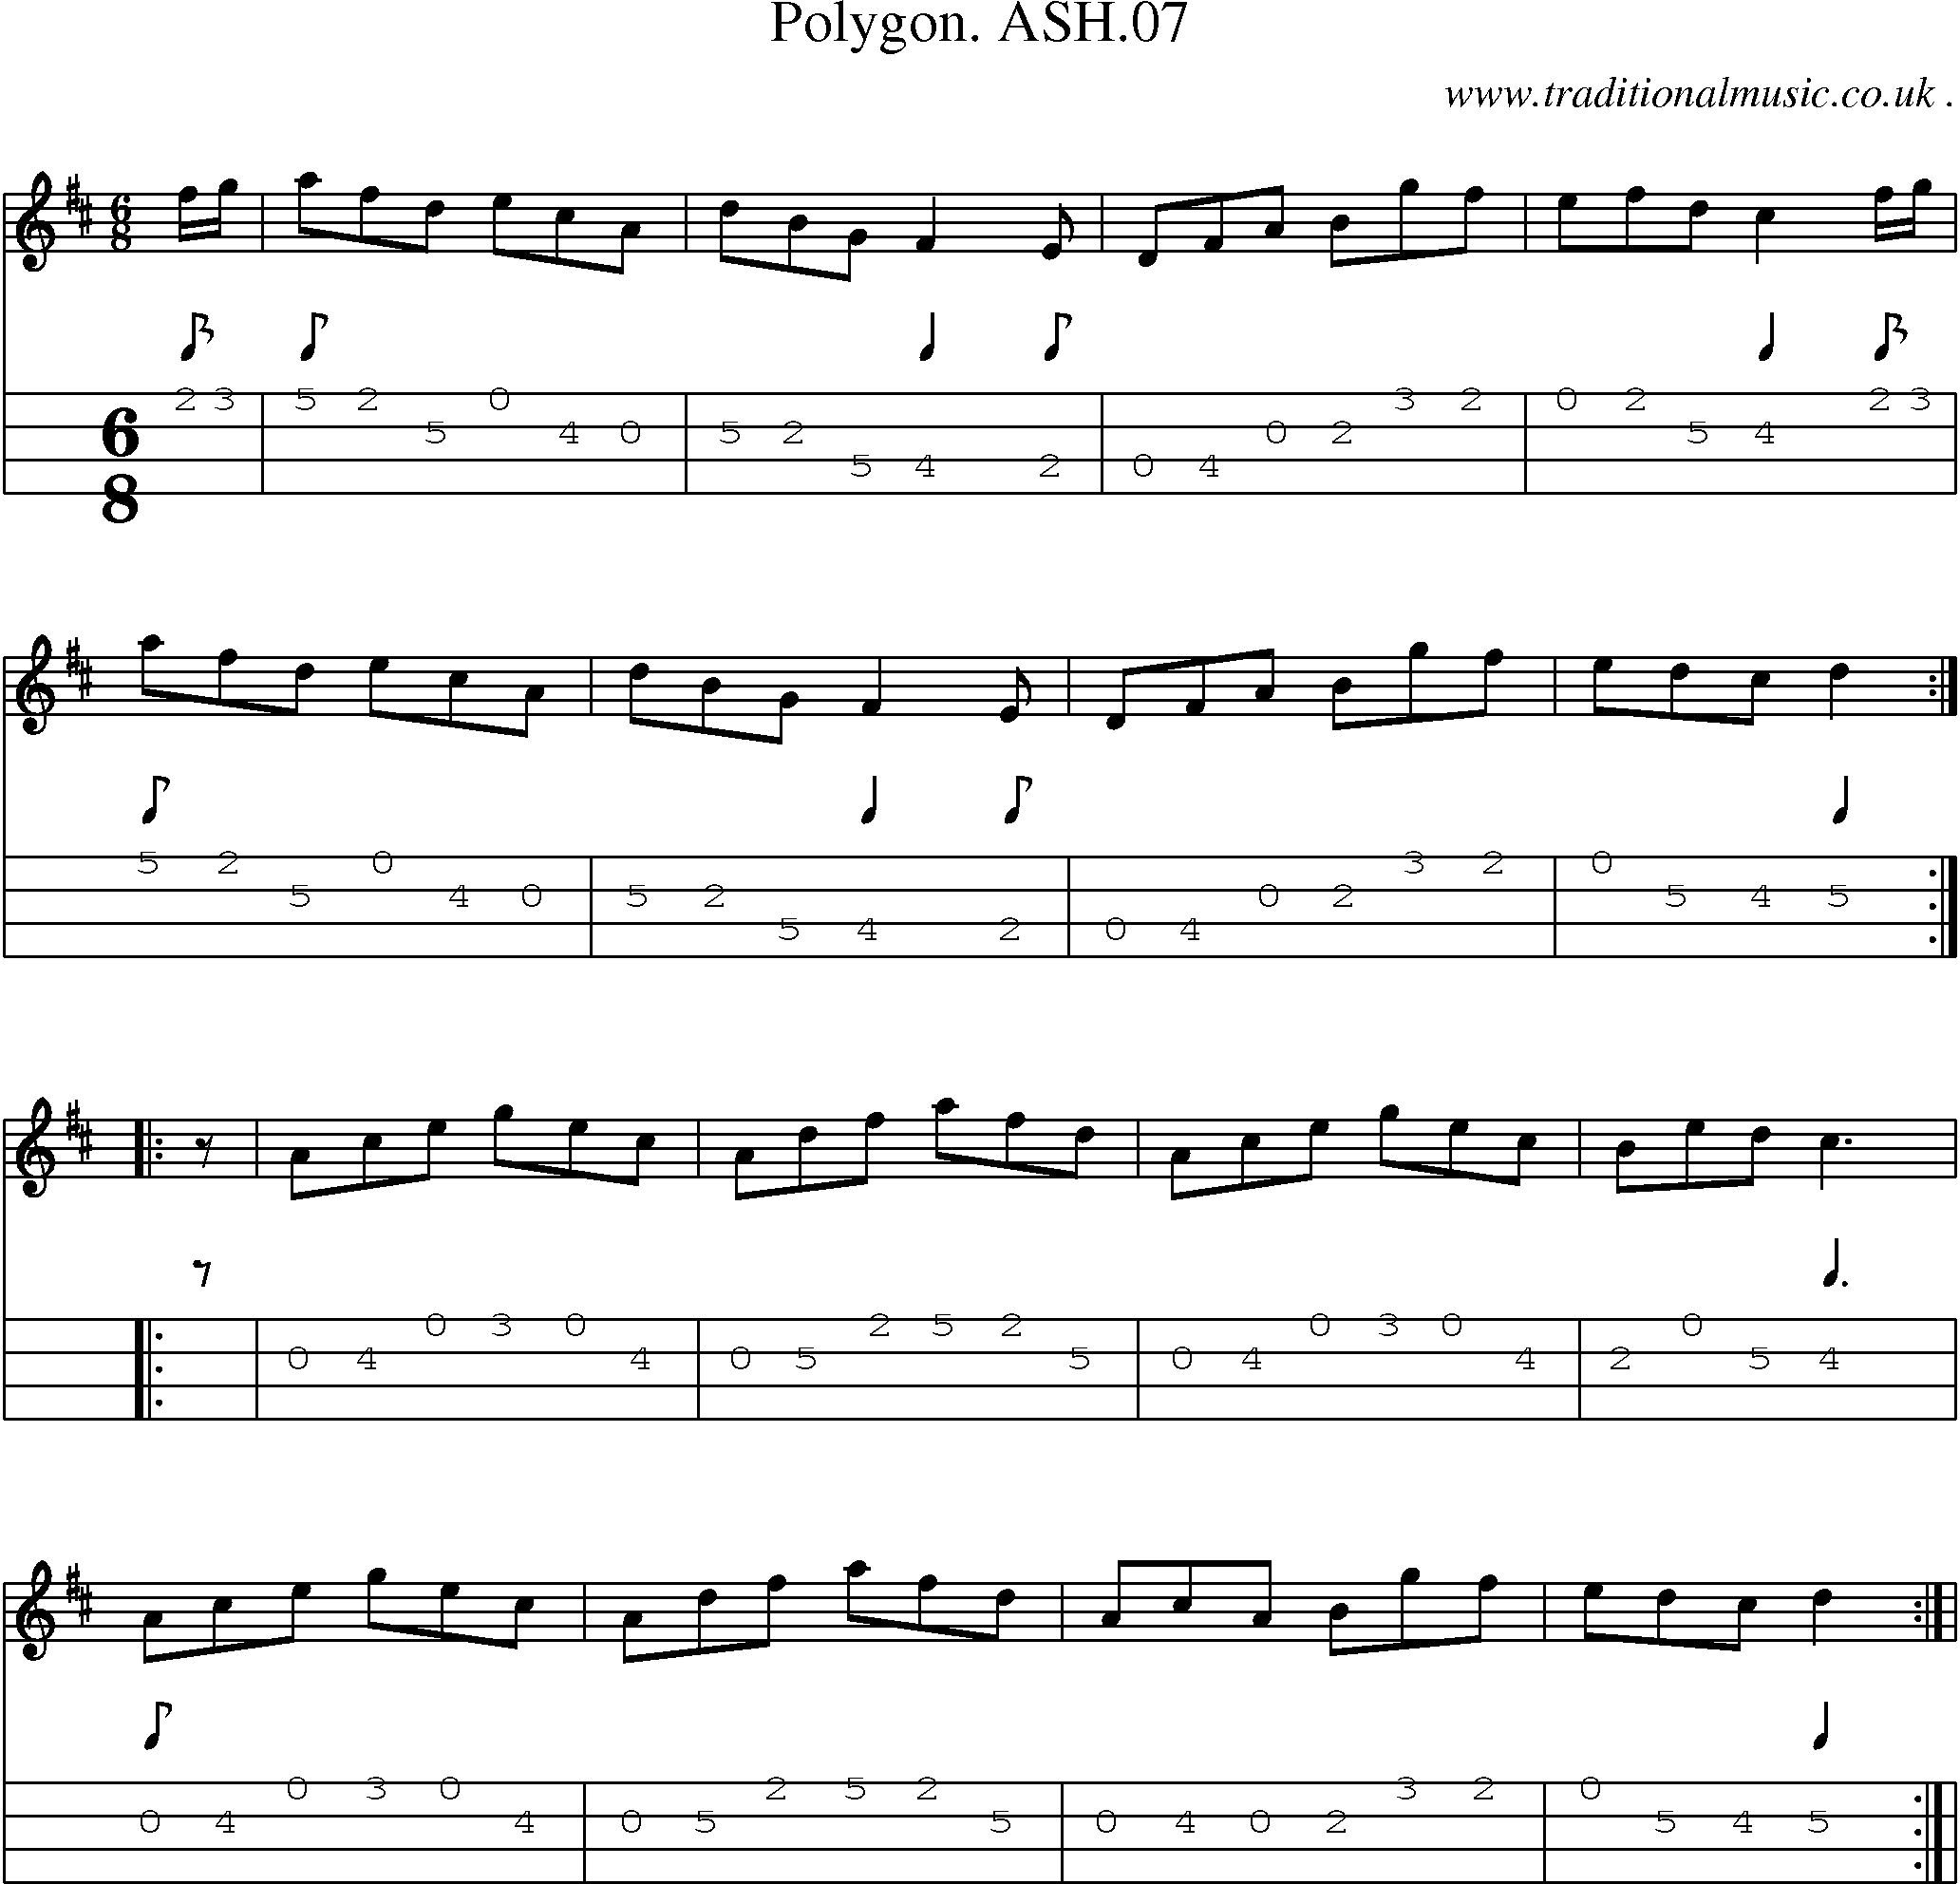 Sheet-Music and Mandolin Tabs for Polygon Ash07